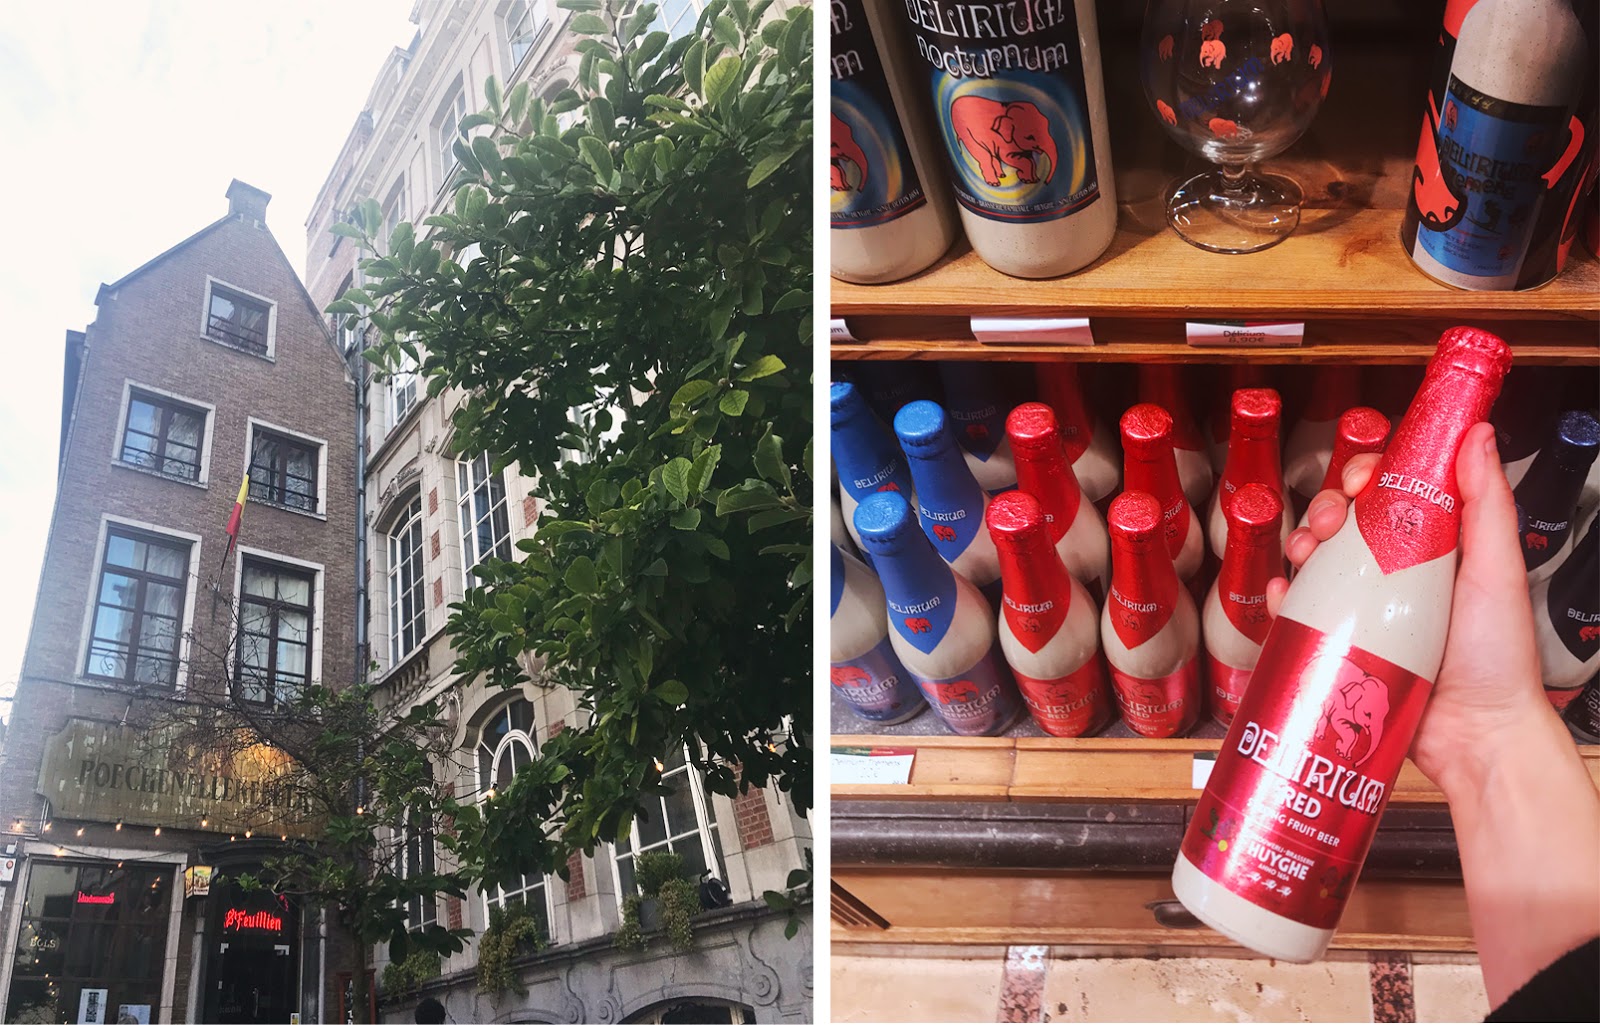 Delirium Beer and Brussels Street View